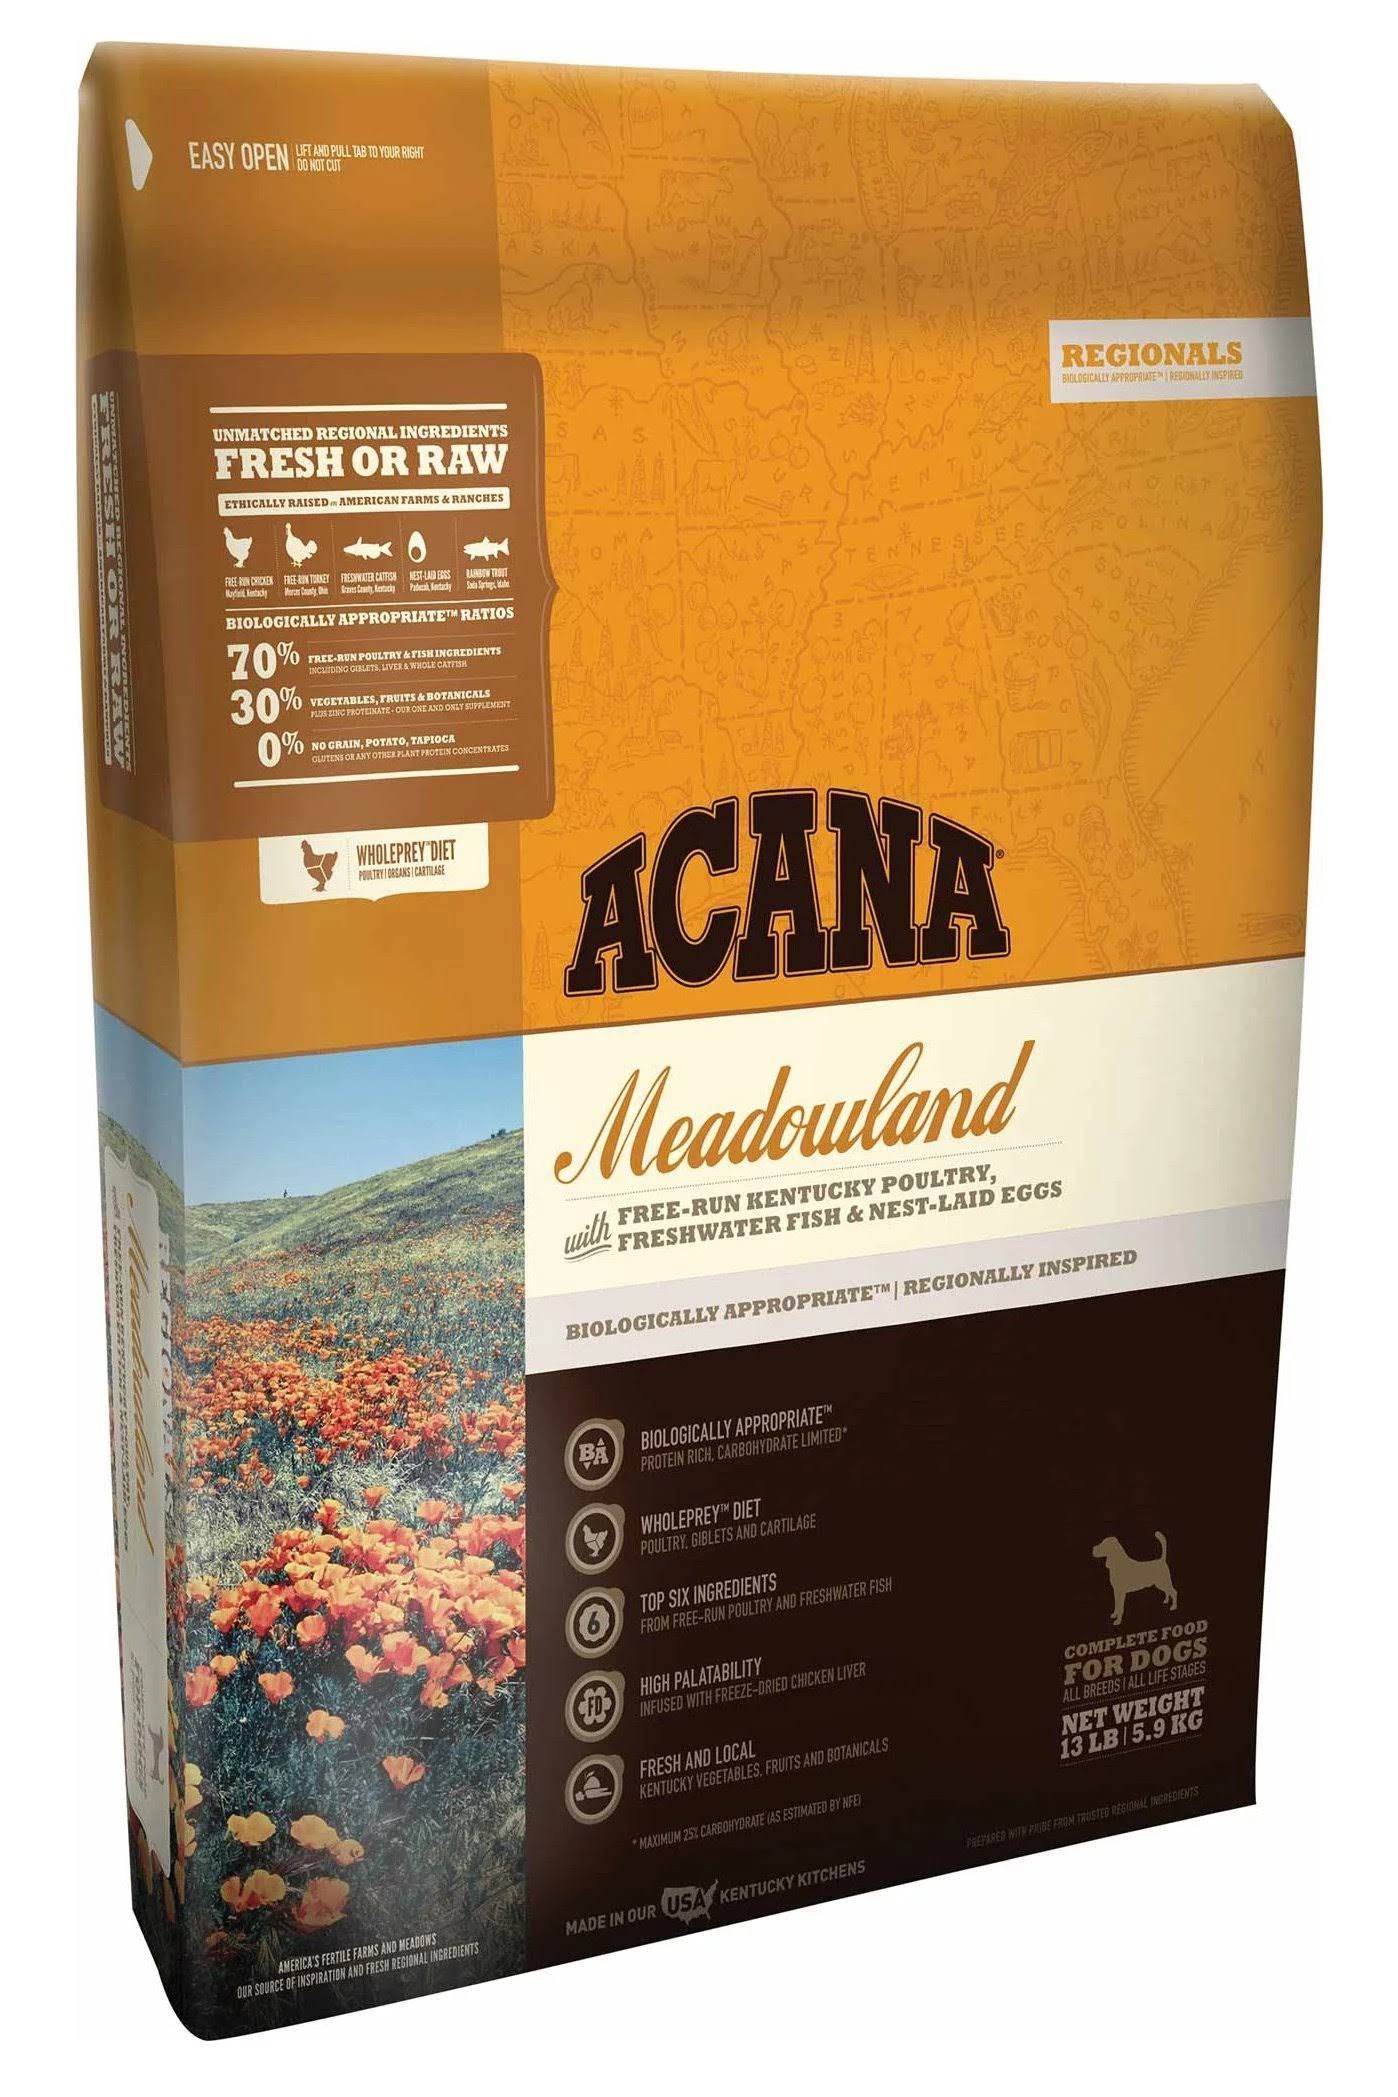 Acana Highest Protein, Meadowland, Grain Free Dry Dog Food, 25lb